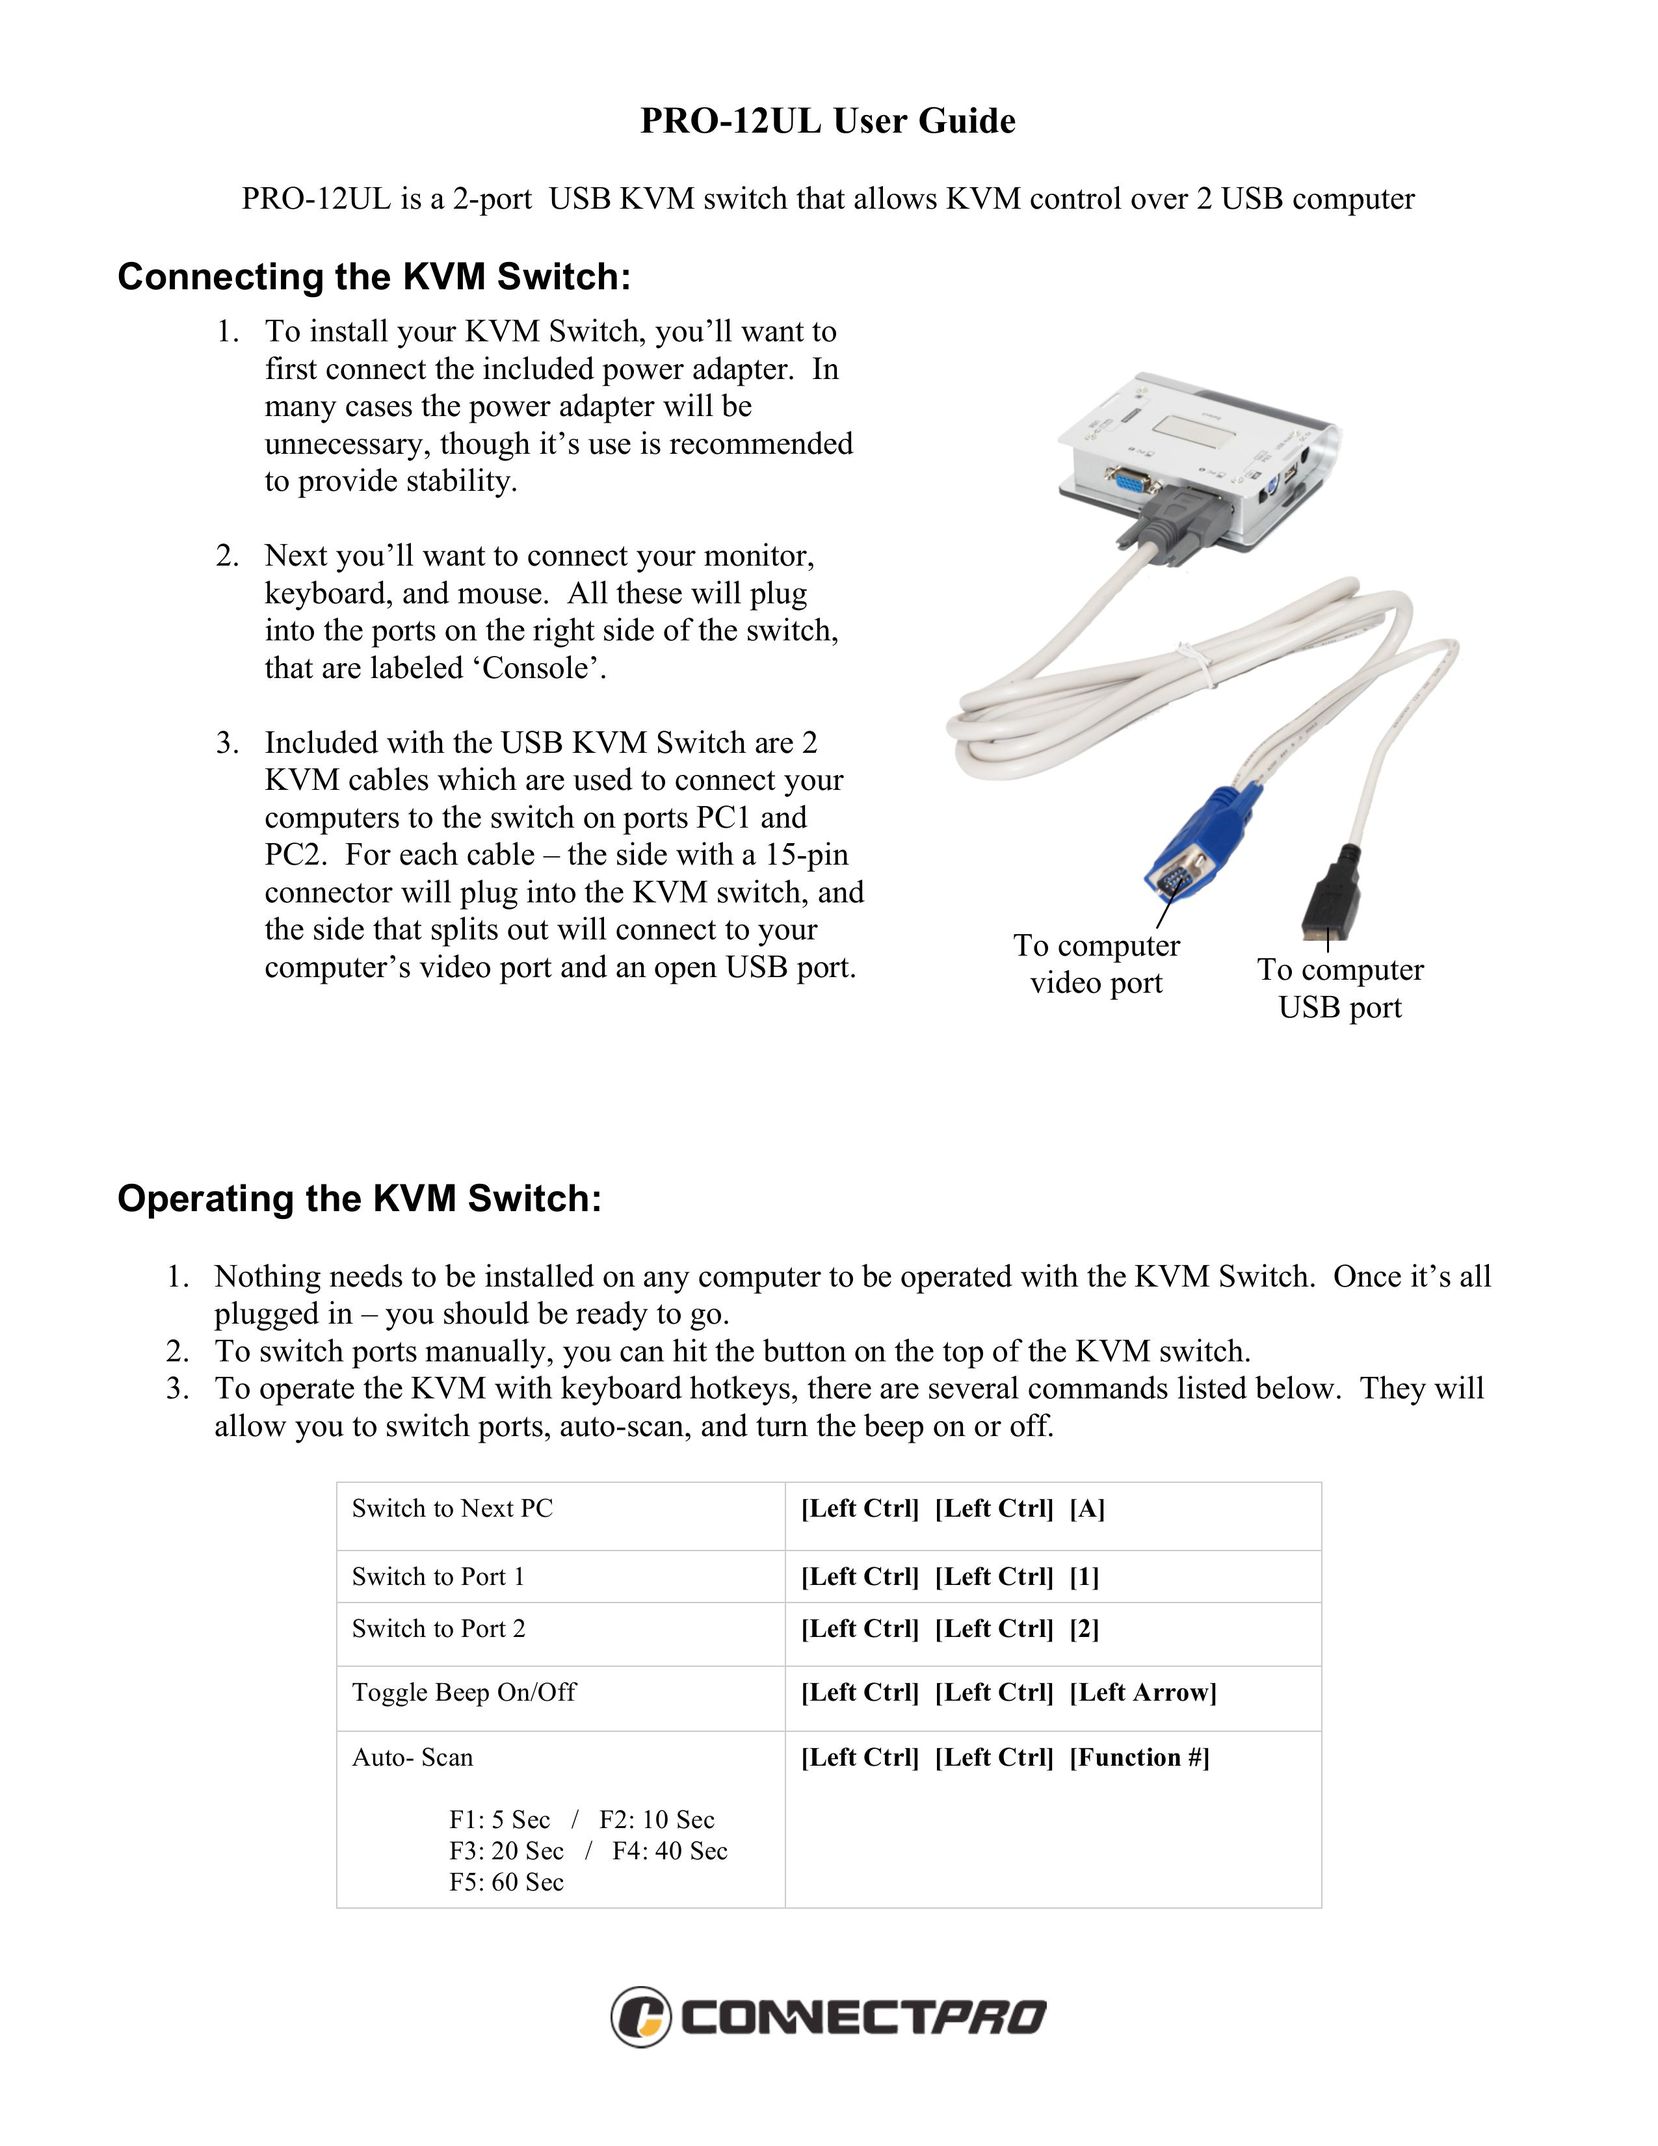 ConnectPRO PRO-12UL Switch User Manual